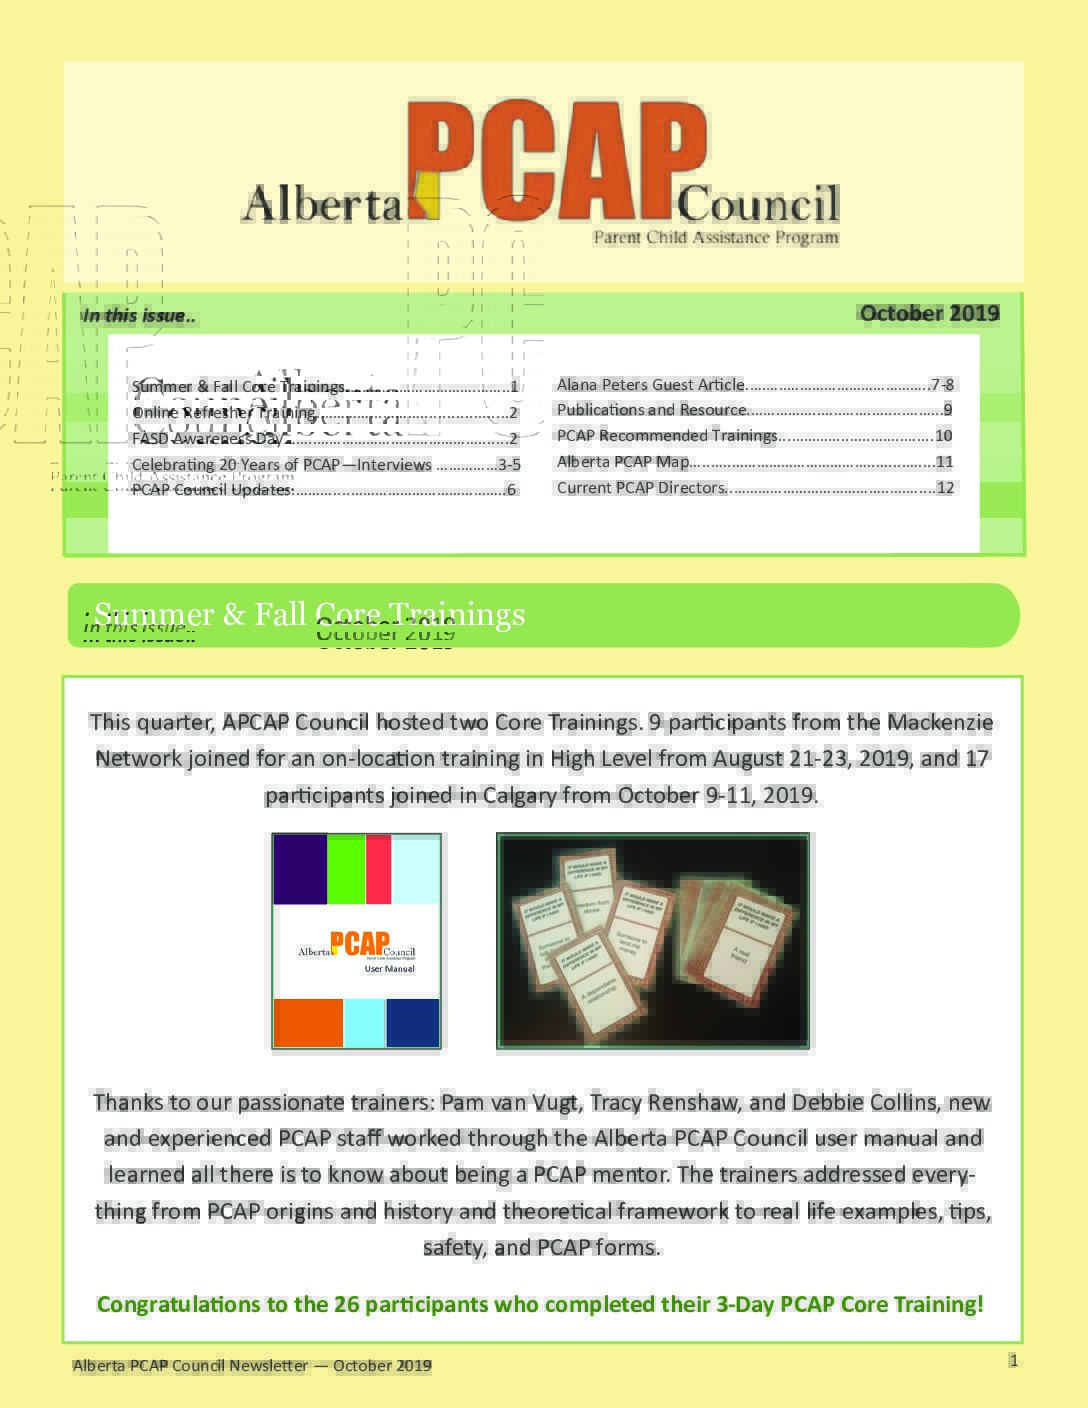 ABPCAP-Q2-Newsletter-October-2019-pdf